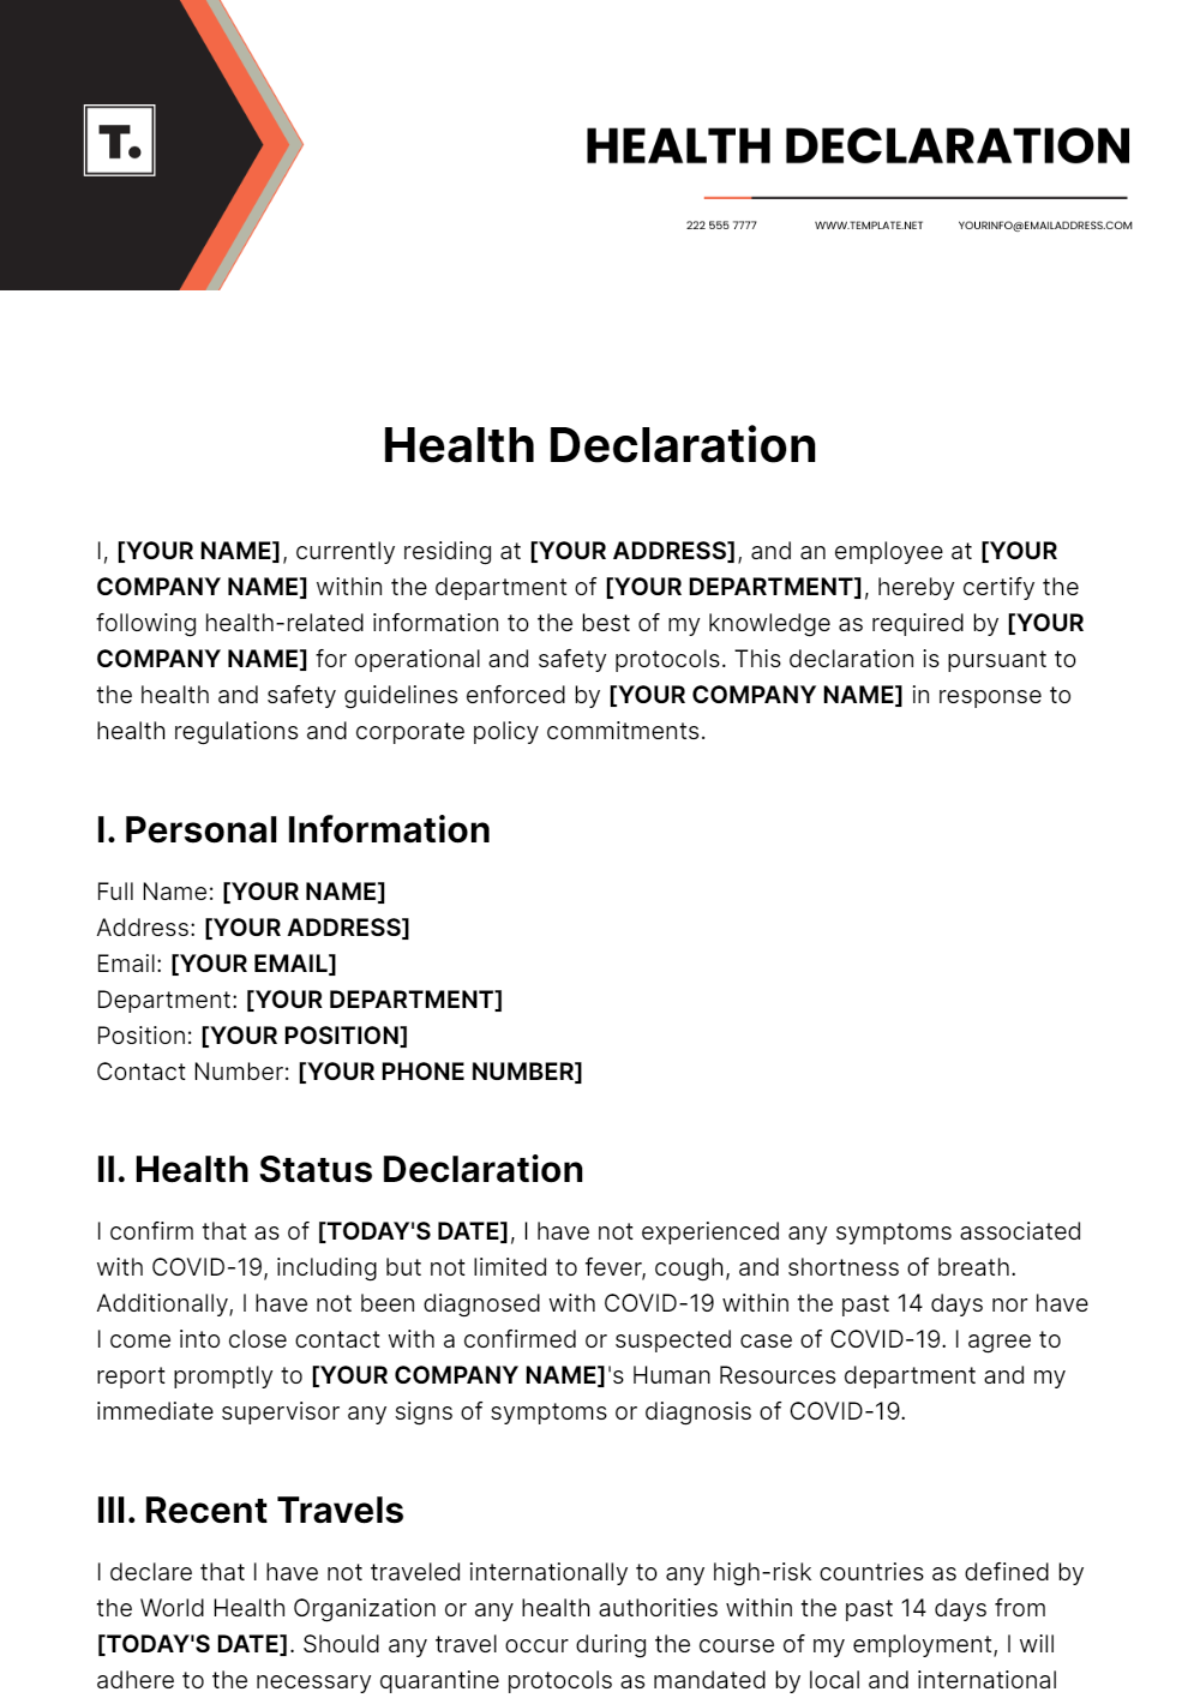 Health Declaration Template